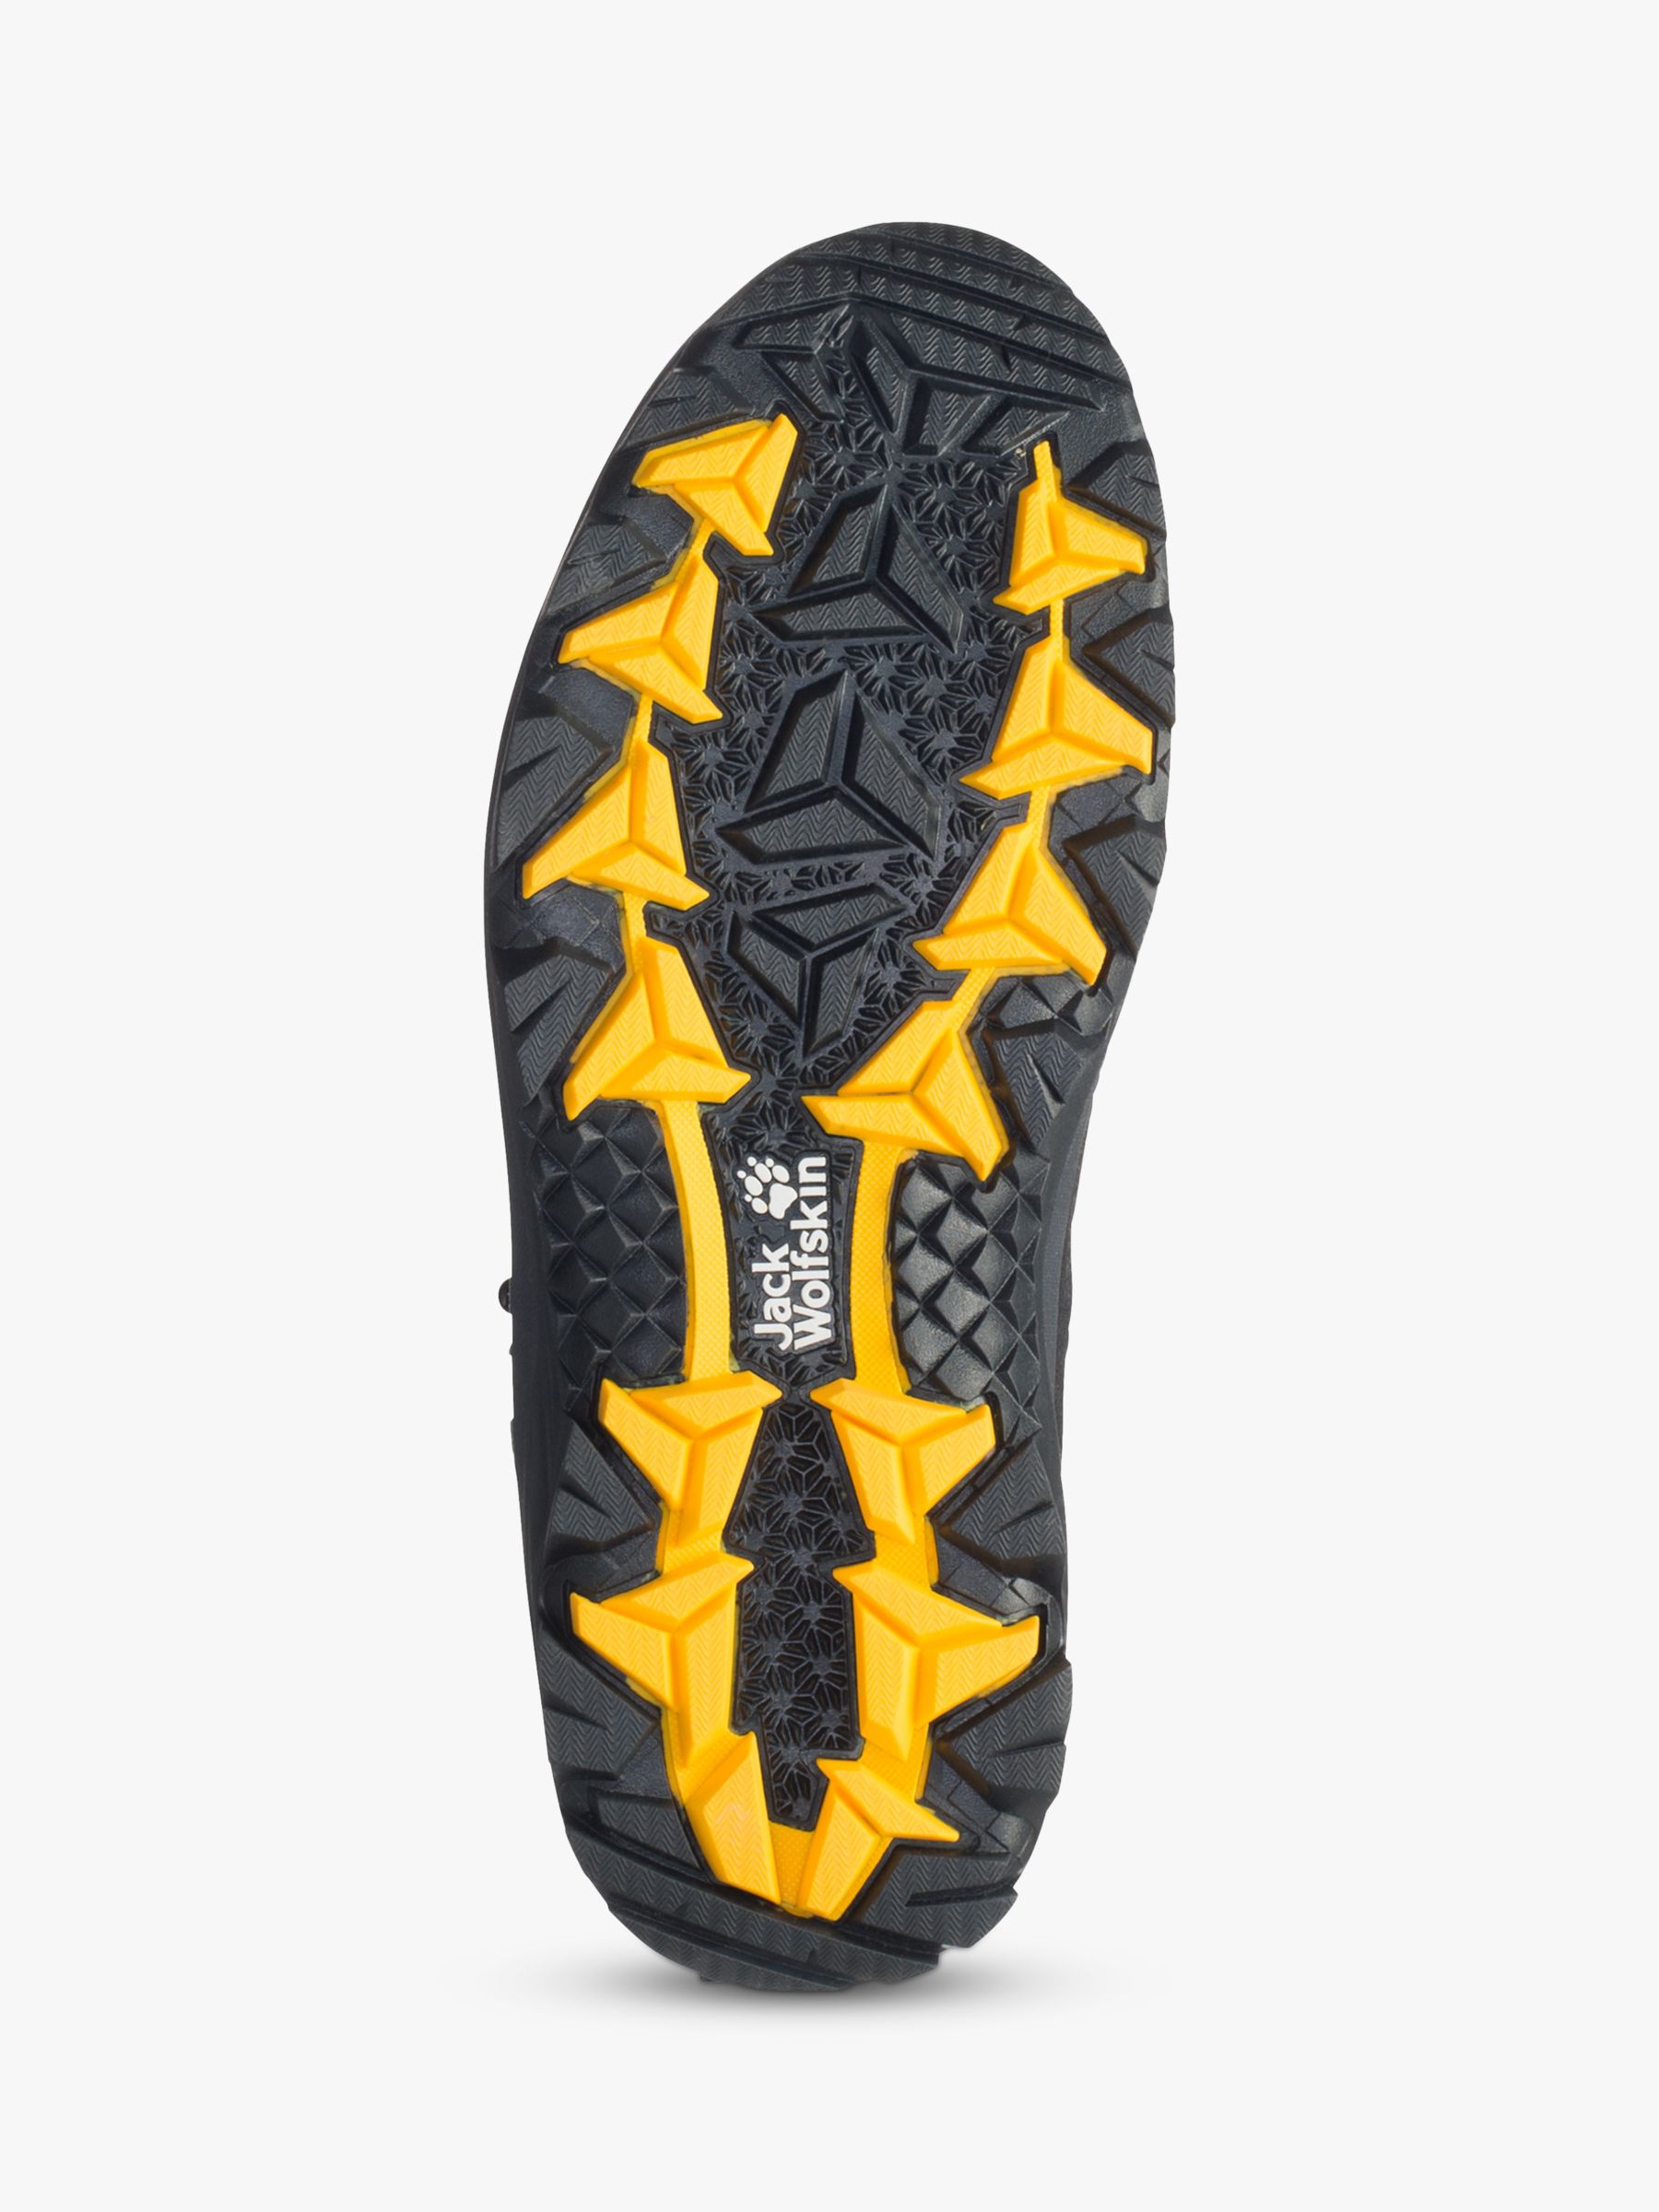 Jack Wolfskin Vojo 3 Texapore Men's Waterproof Walking Boots, Black/Burly Yellow, 7